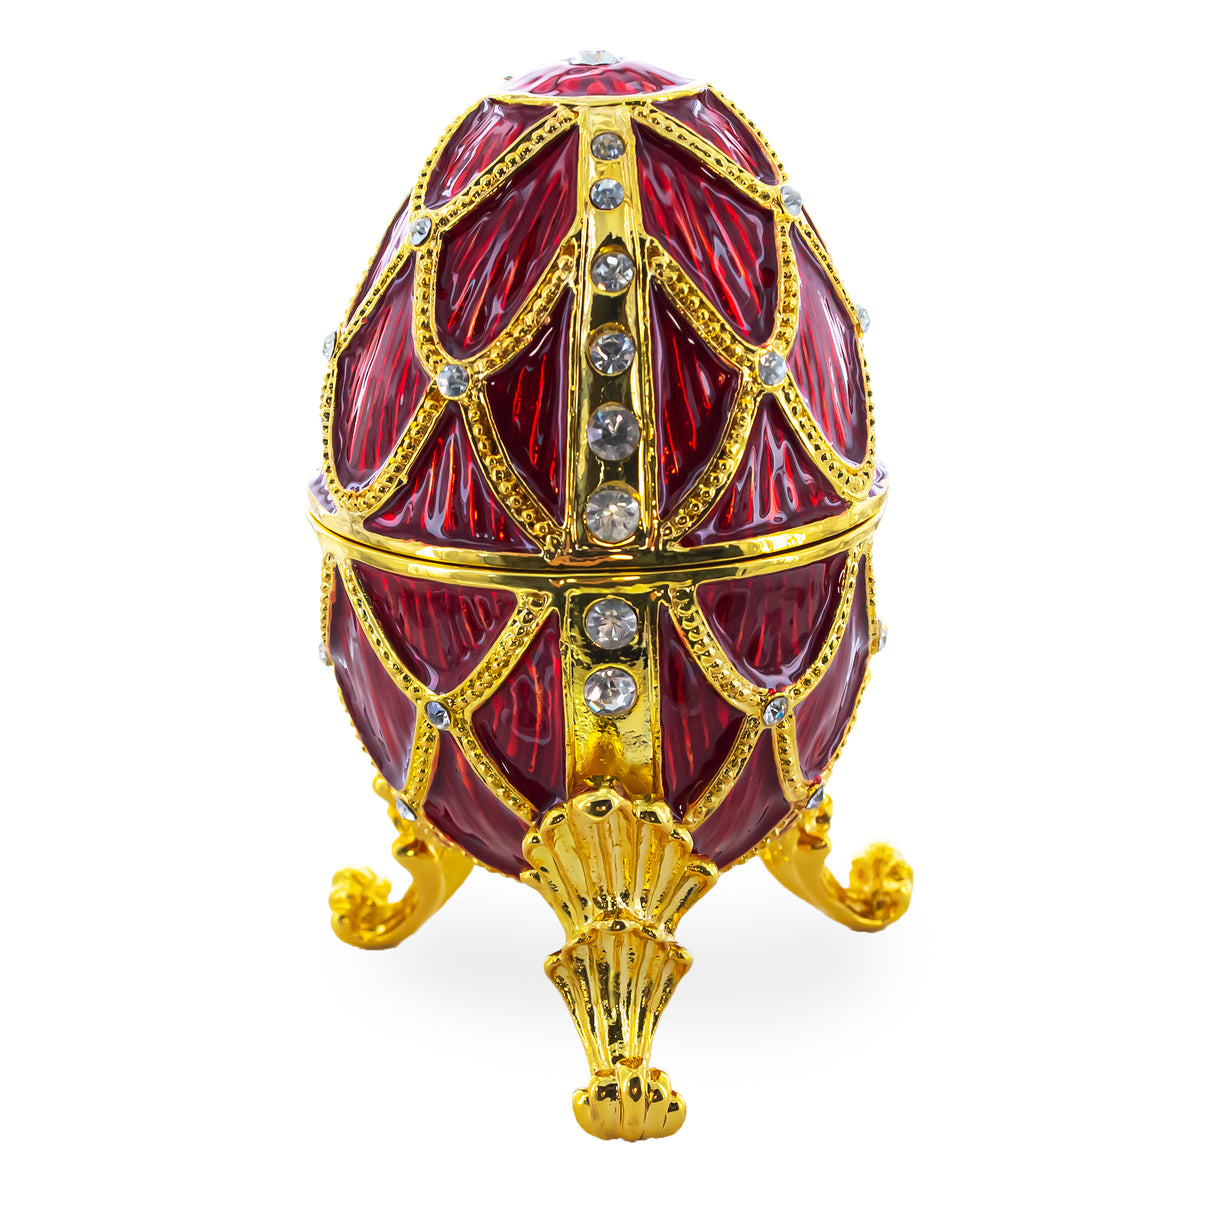 Golden Trellis Crimson Enamel Royal Inspired Imperial Metal Easter Egg 4 Inches in Red color, Oval shape